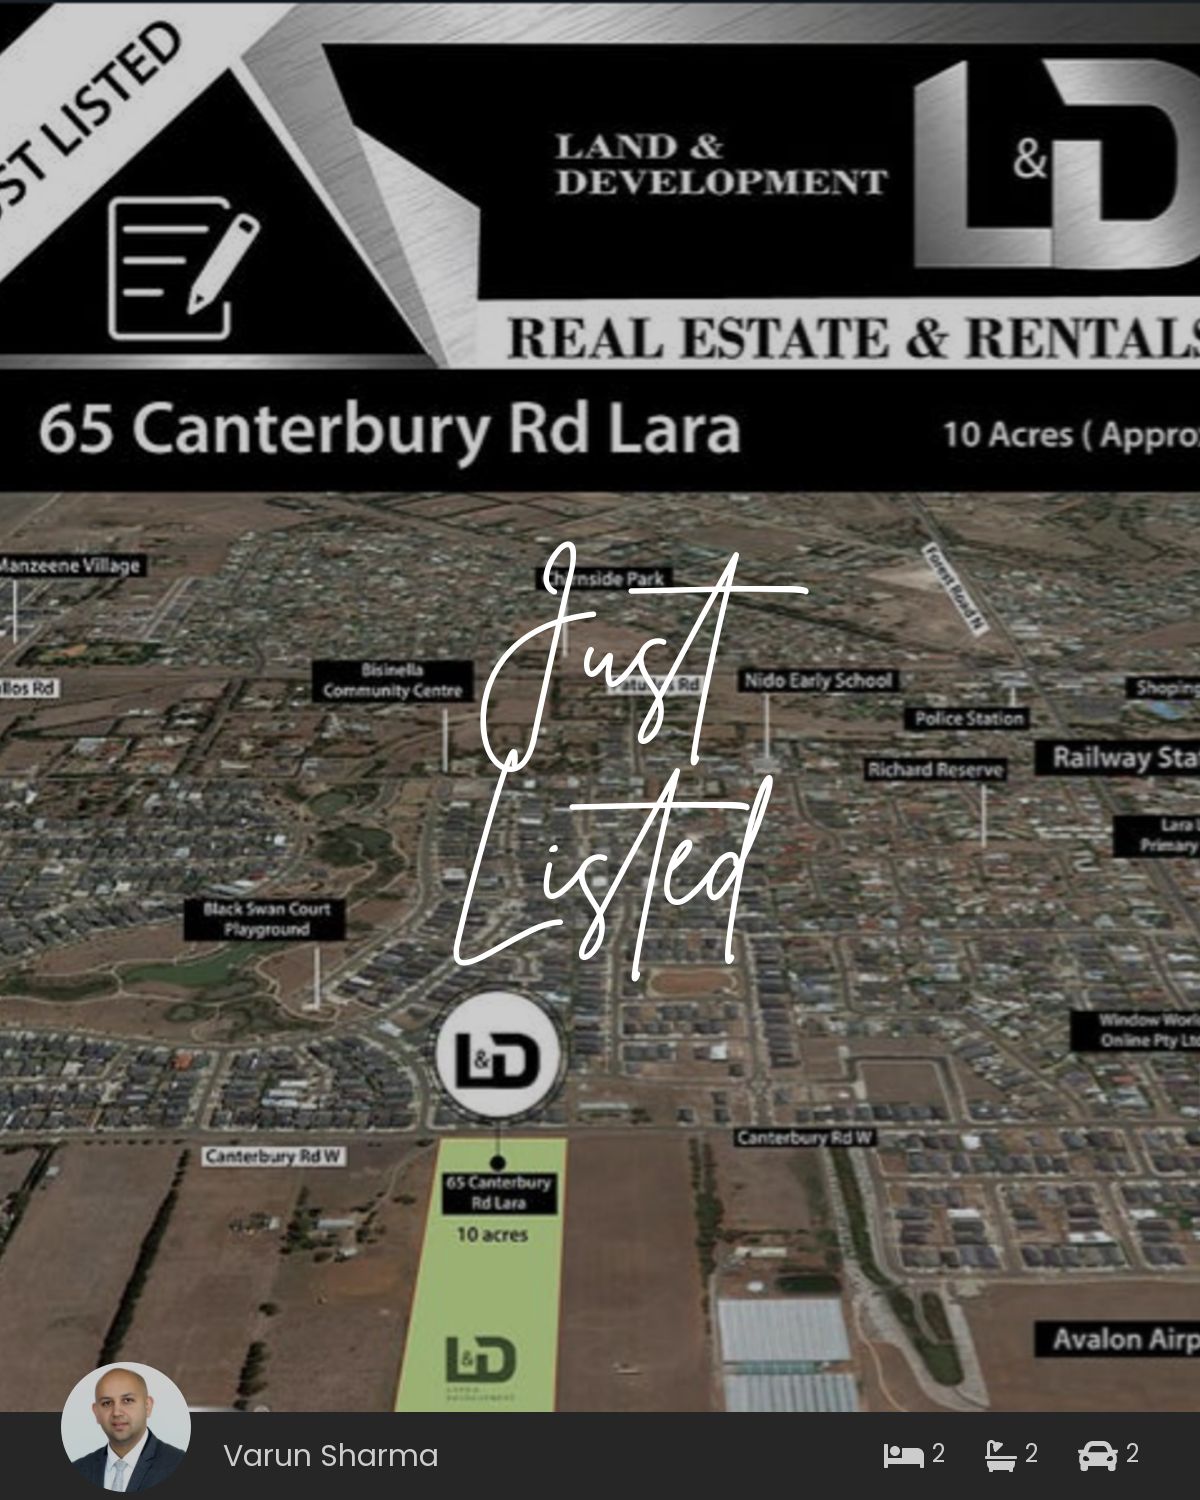 65 Canterbury Road, Lara, VIC 3212 | Realty.com.au